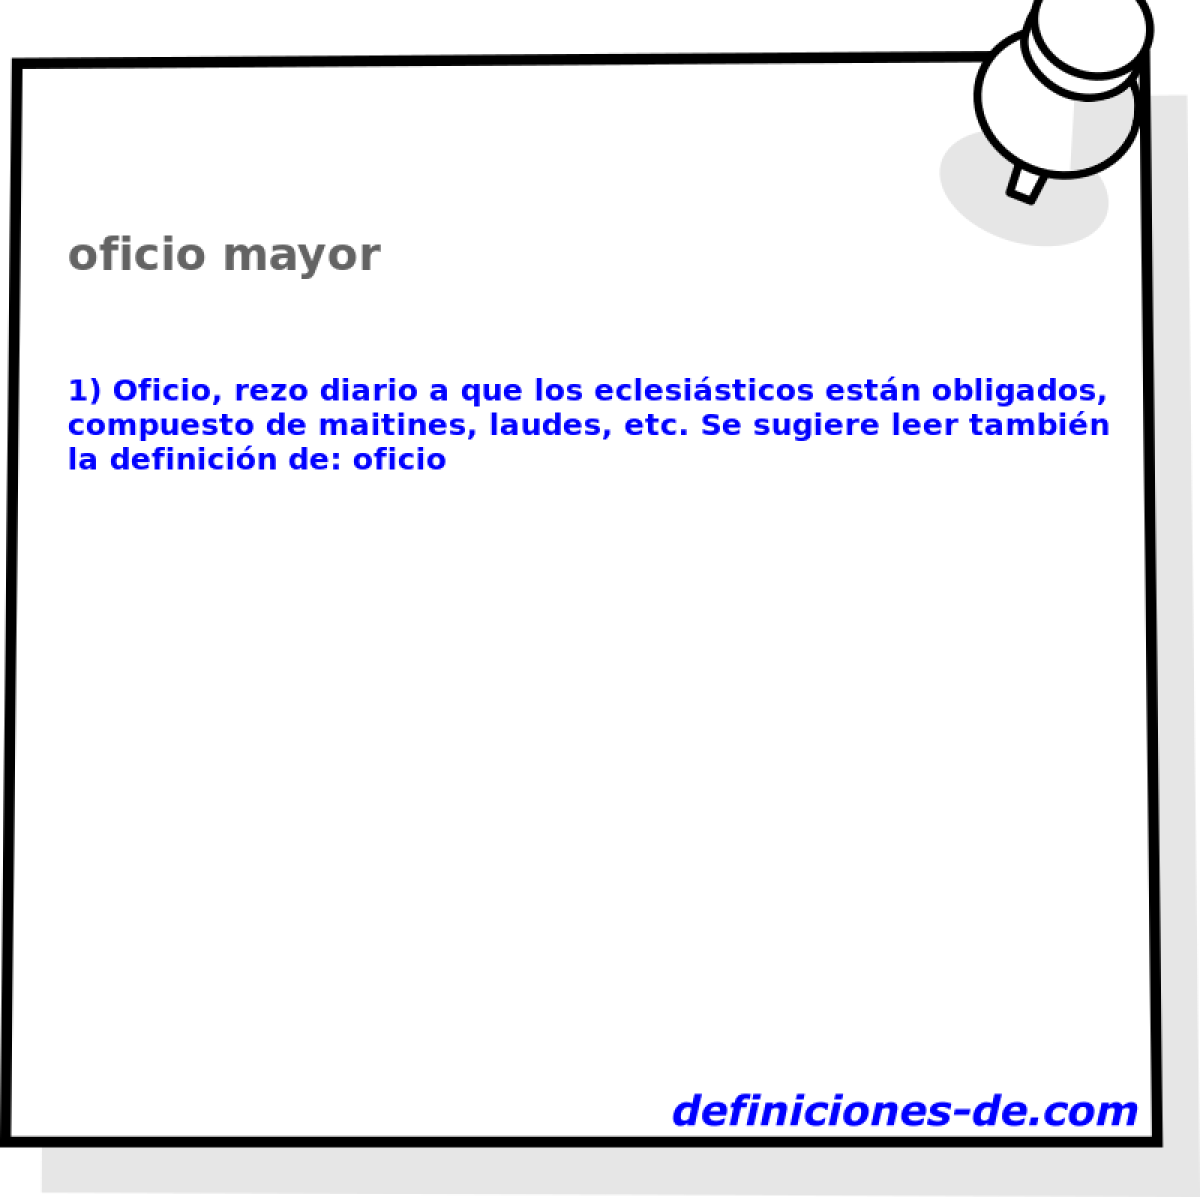 oficio mayor 